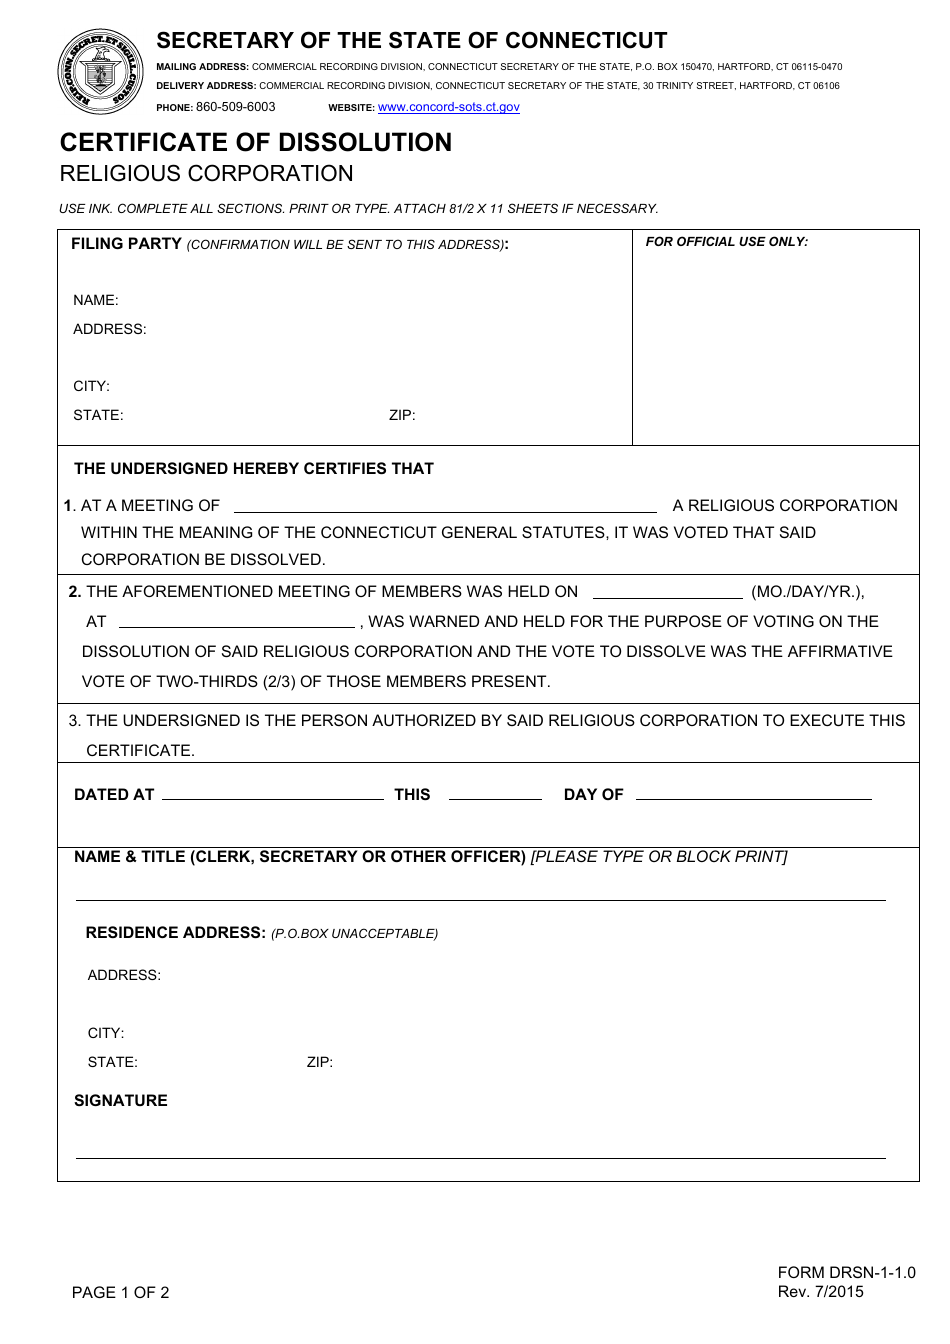 Form DRSN-1-1.0 Certificate of Dissolution - Religious Corporation - Connecticut, Page 1